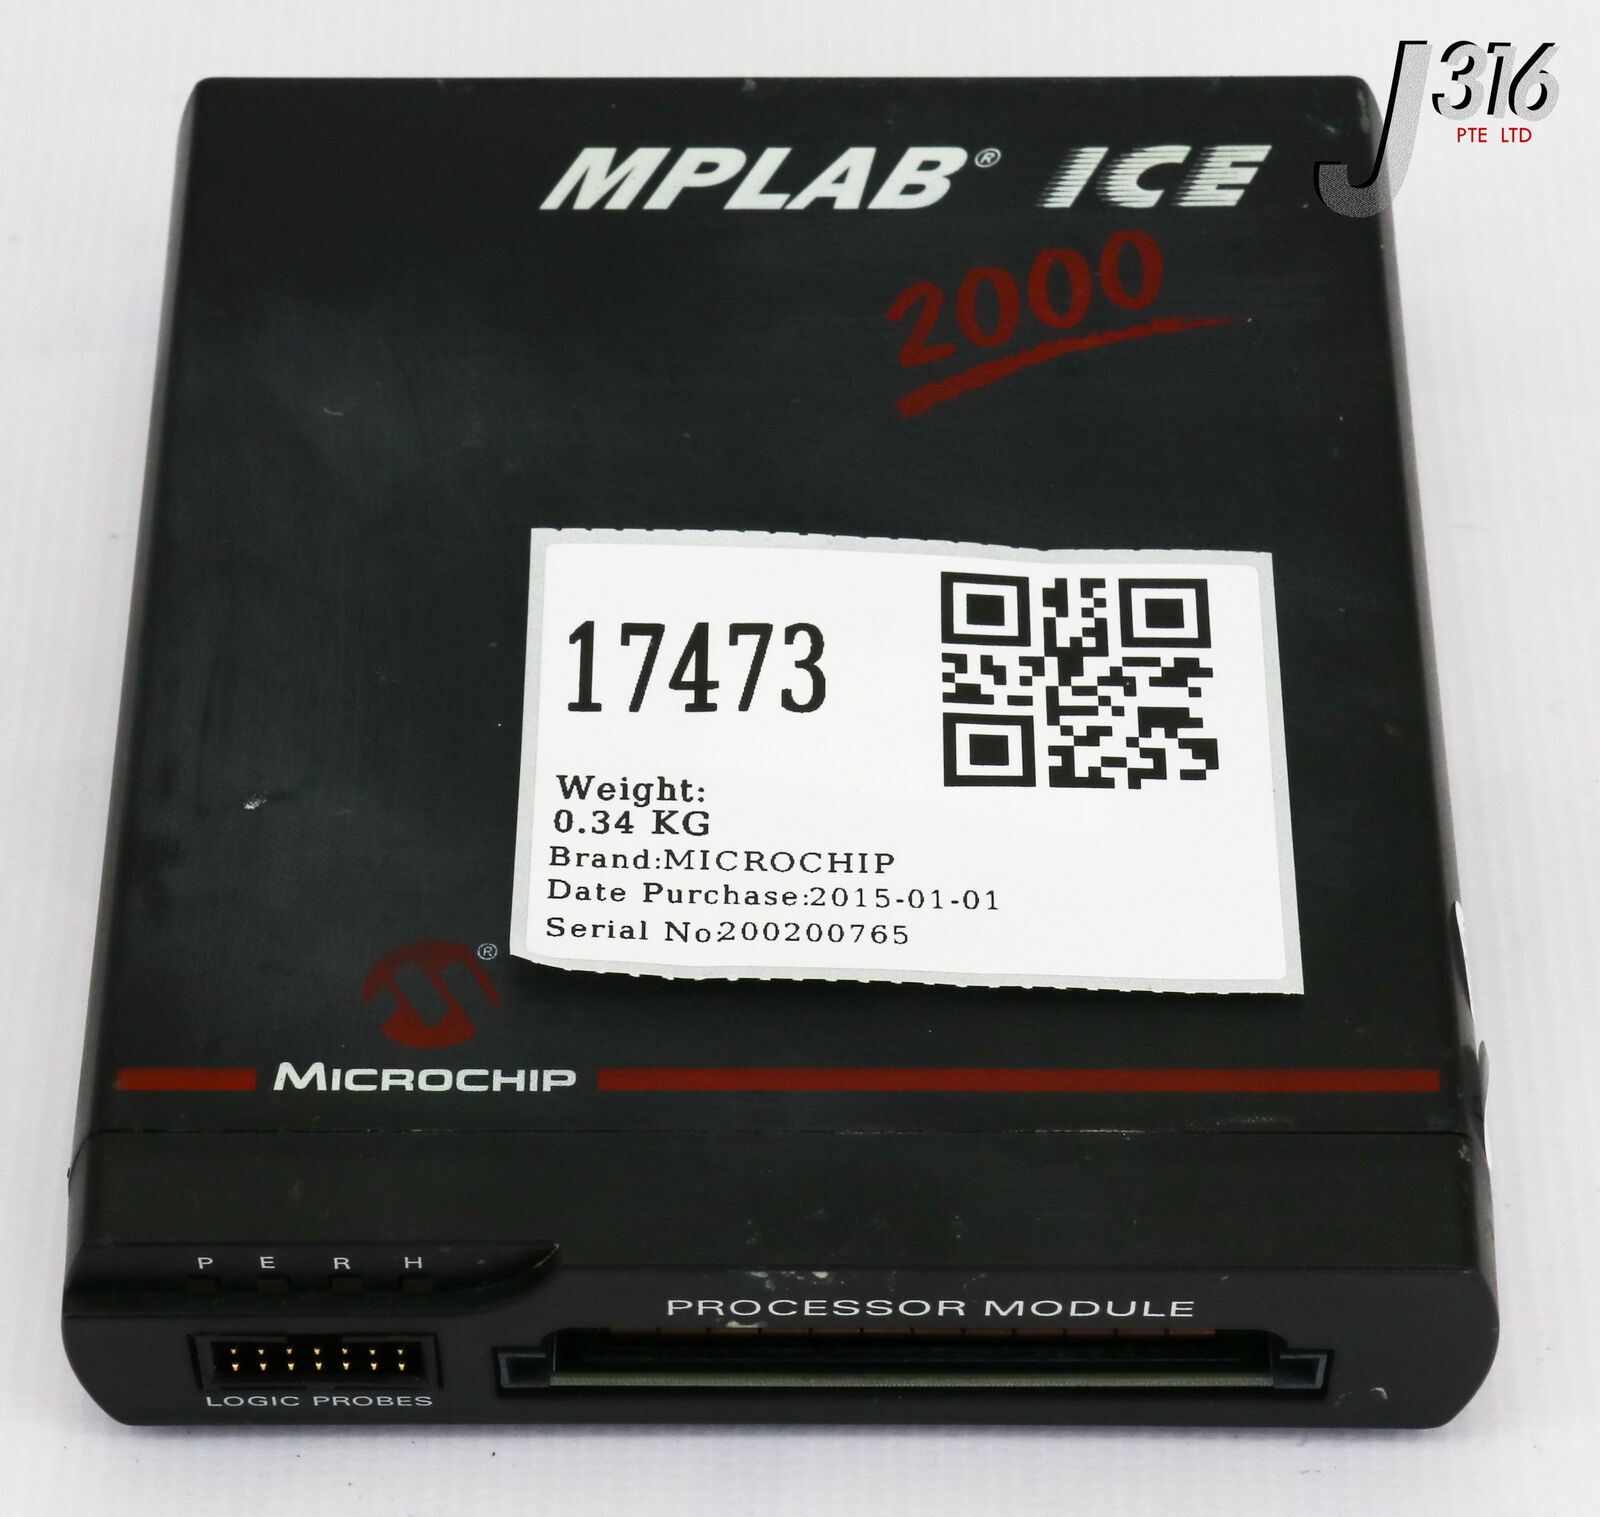 17473 MICROCHIP MPLAB ICE 2000 PROCESSOR MODULE BASE 10-00235-02-R16